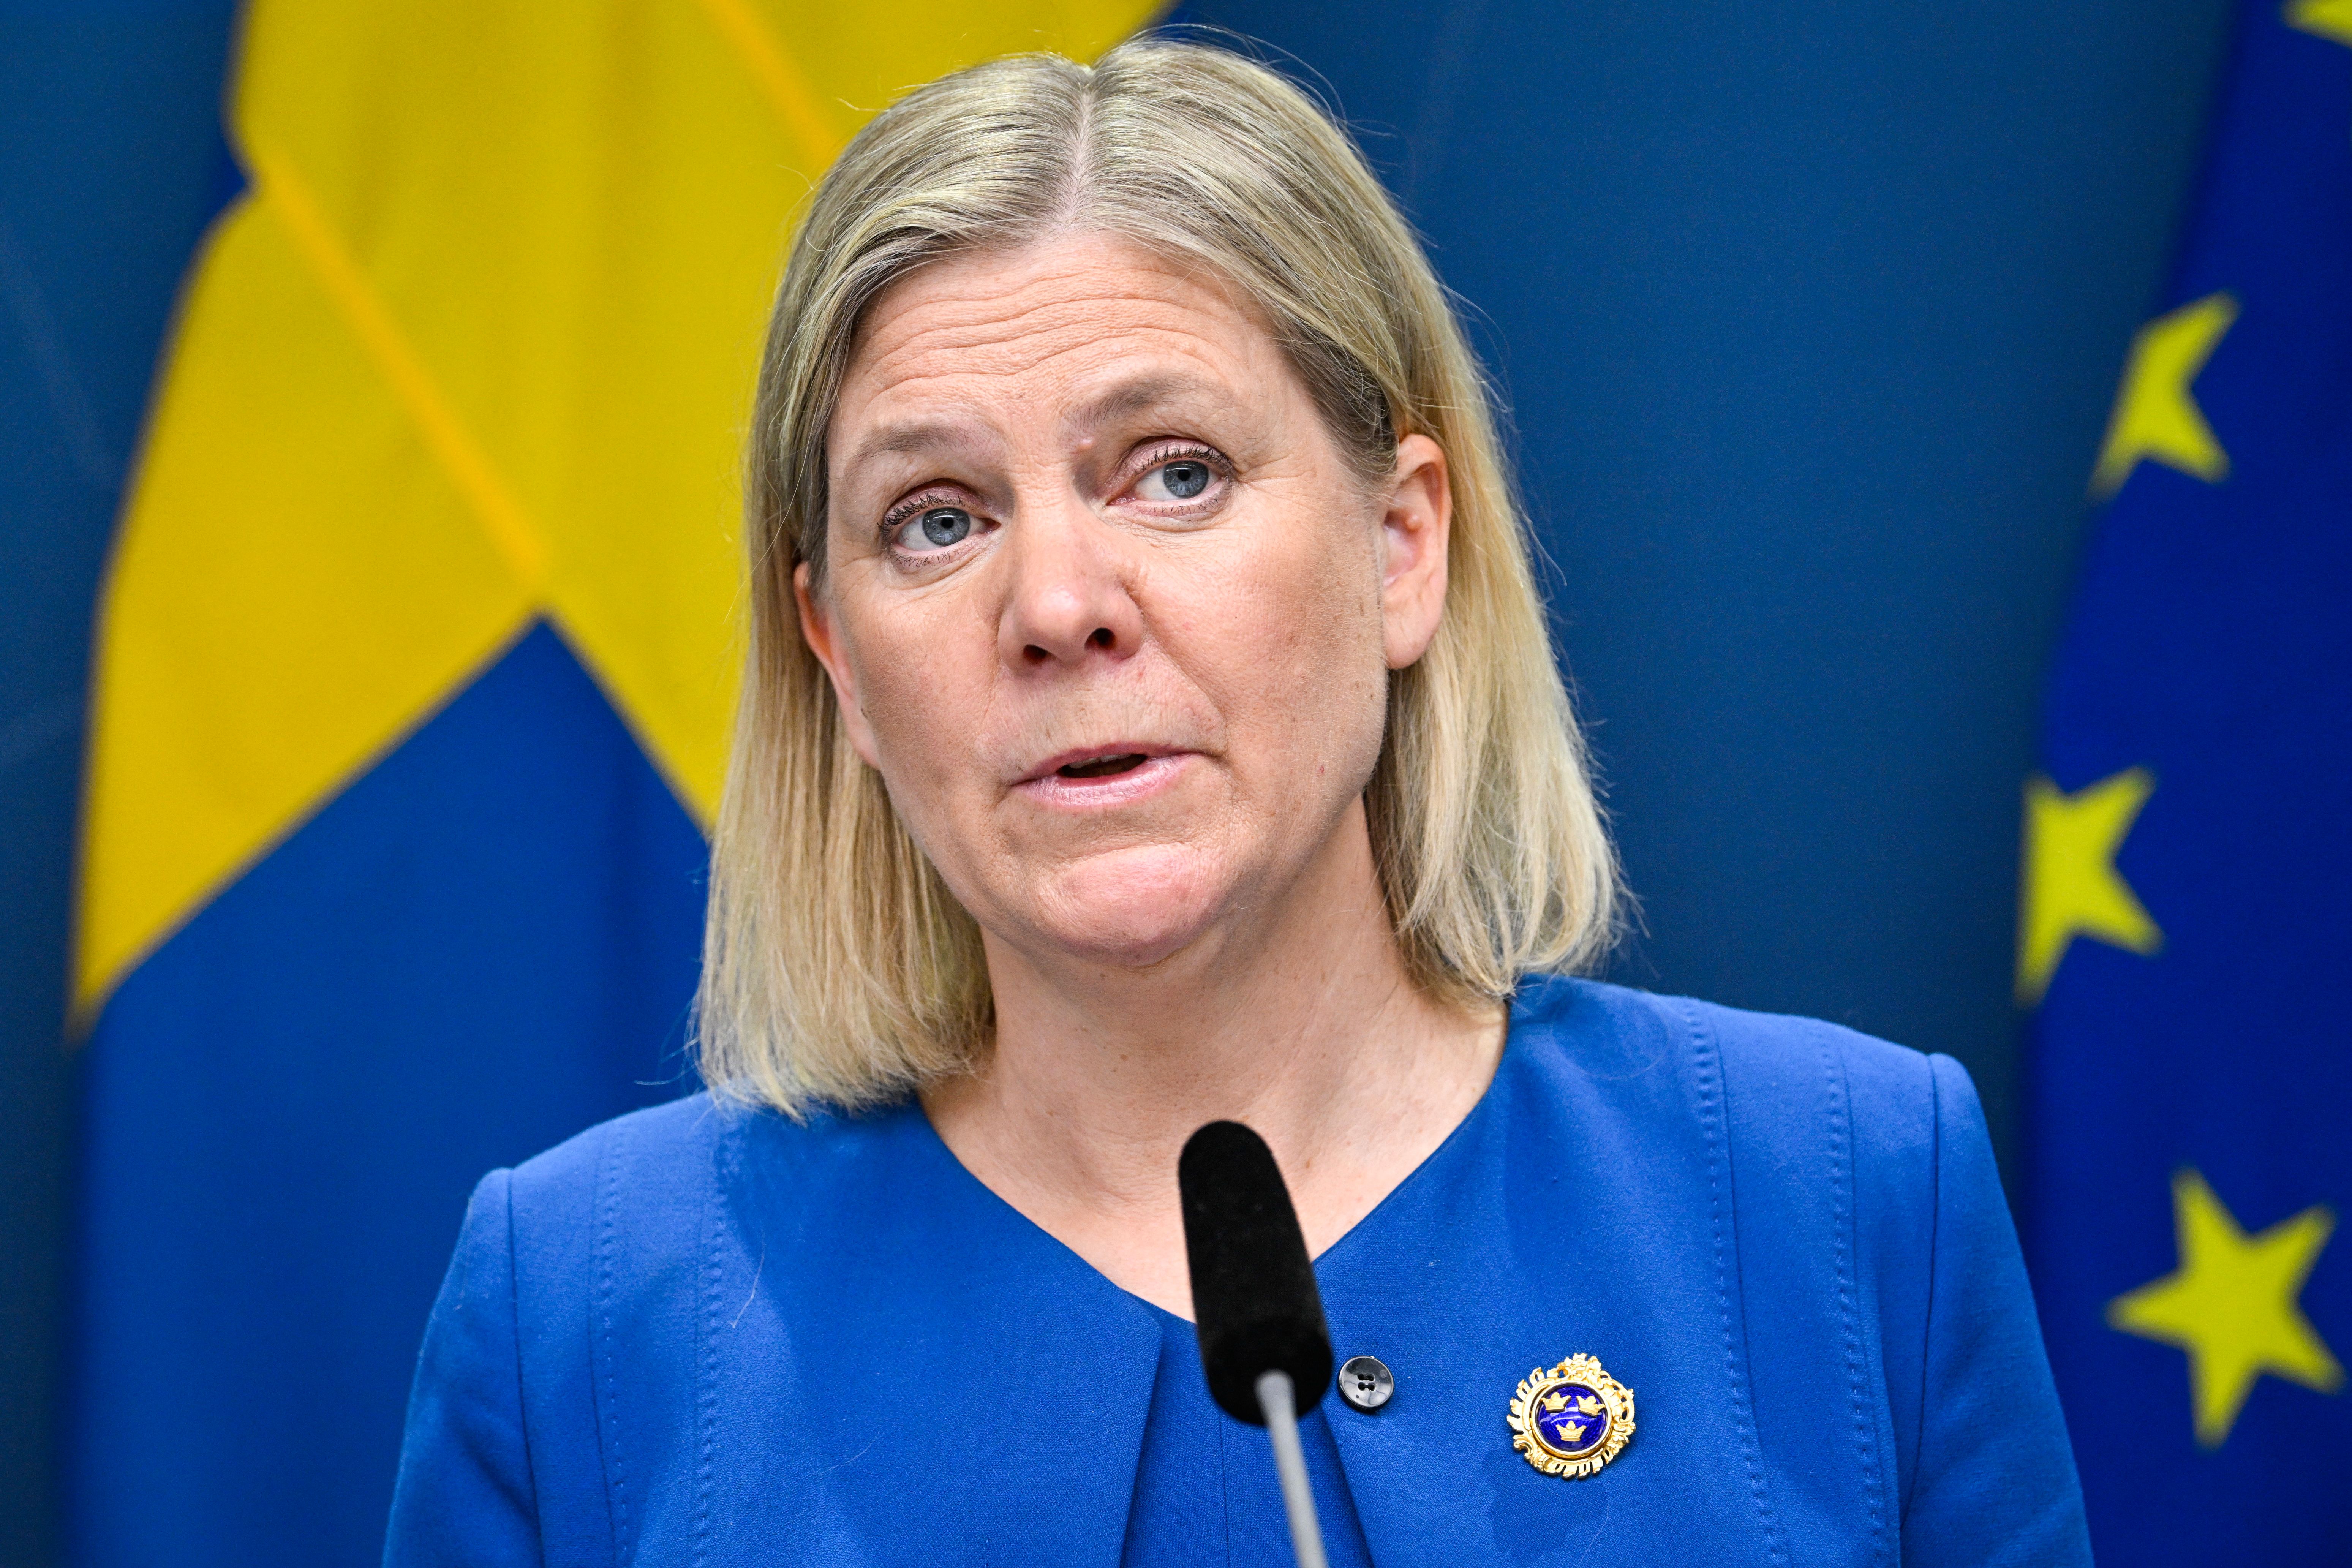 Sweden's Prime Minister Magdalena Andersson gives a news conference in Stockholm, Sweden, on May 16.